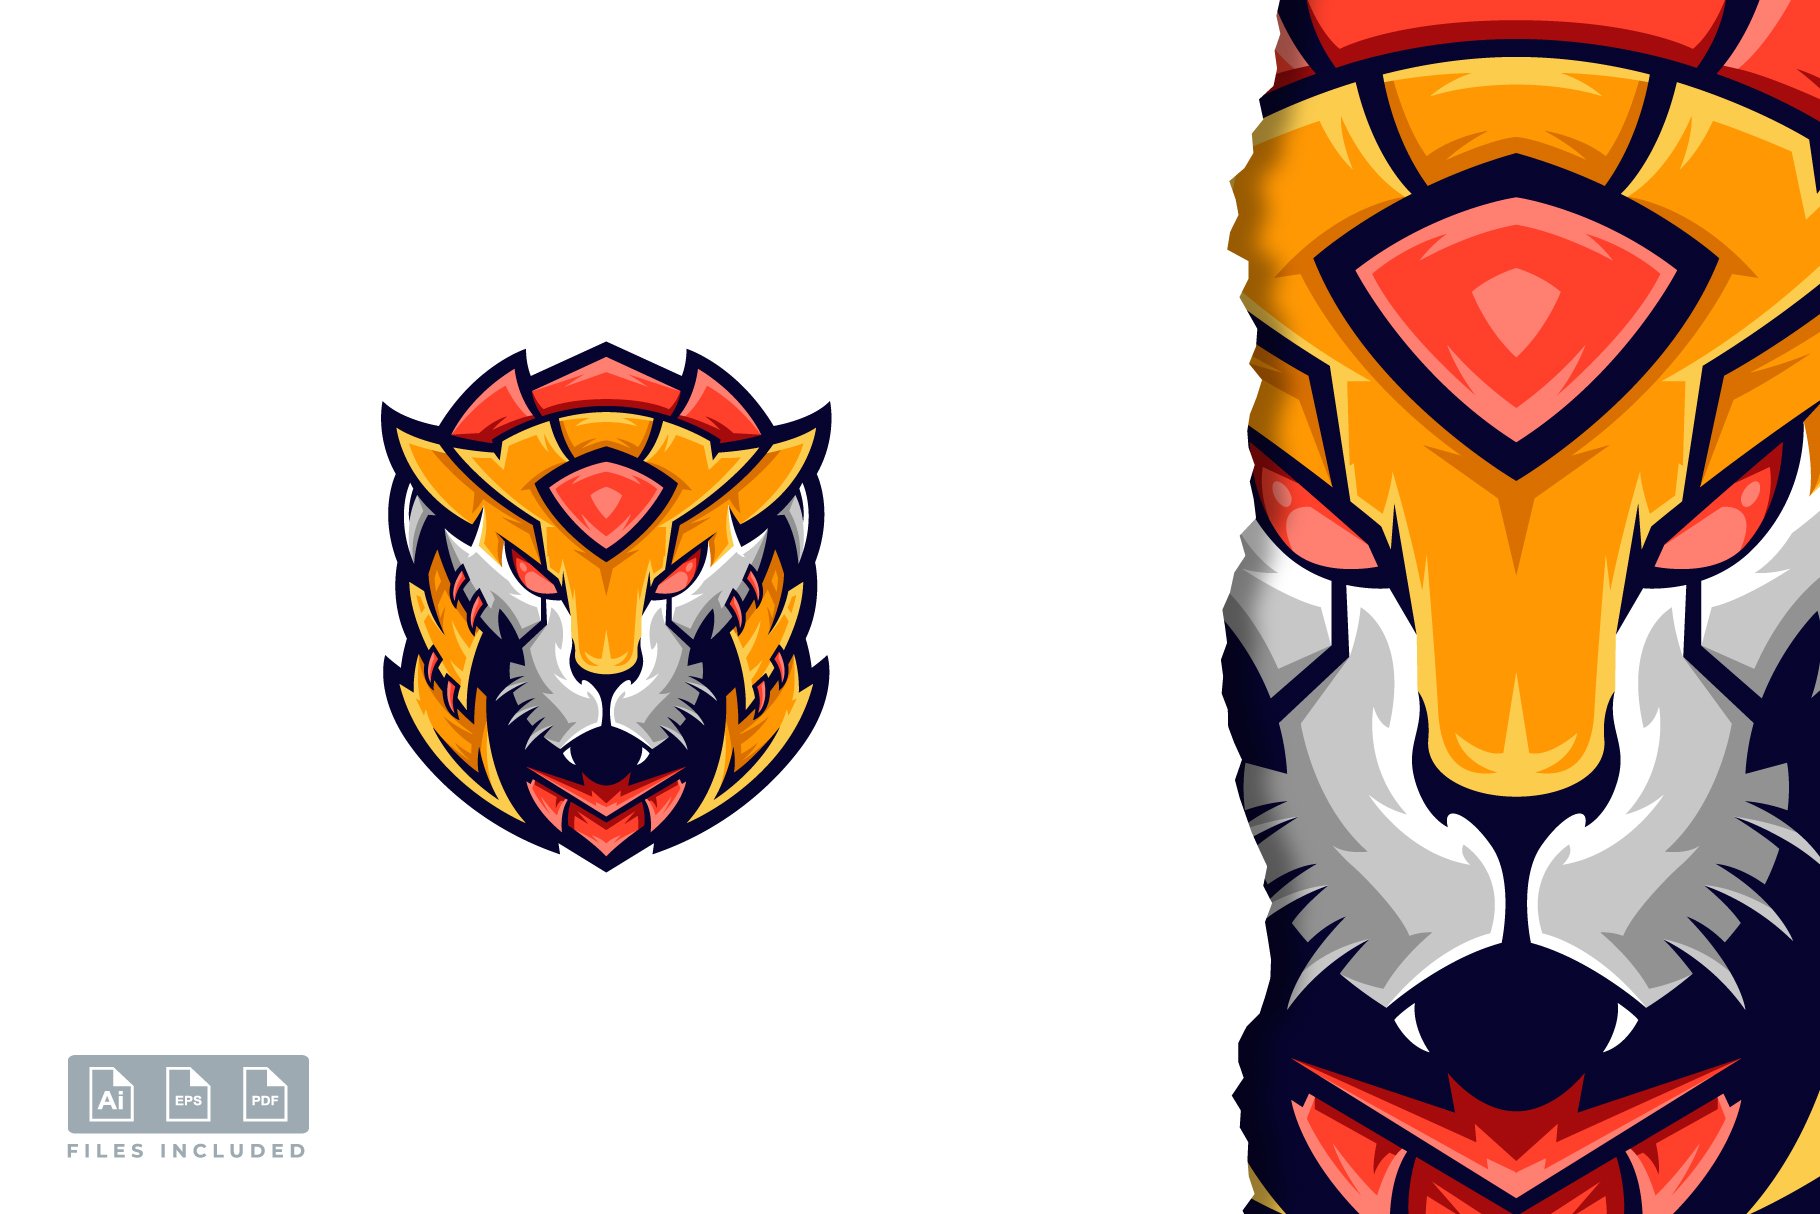 Tiger head logo design cover image.